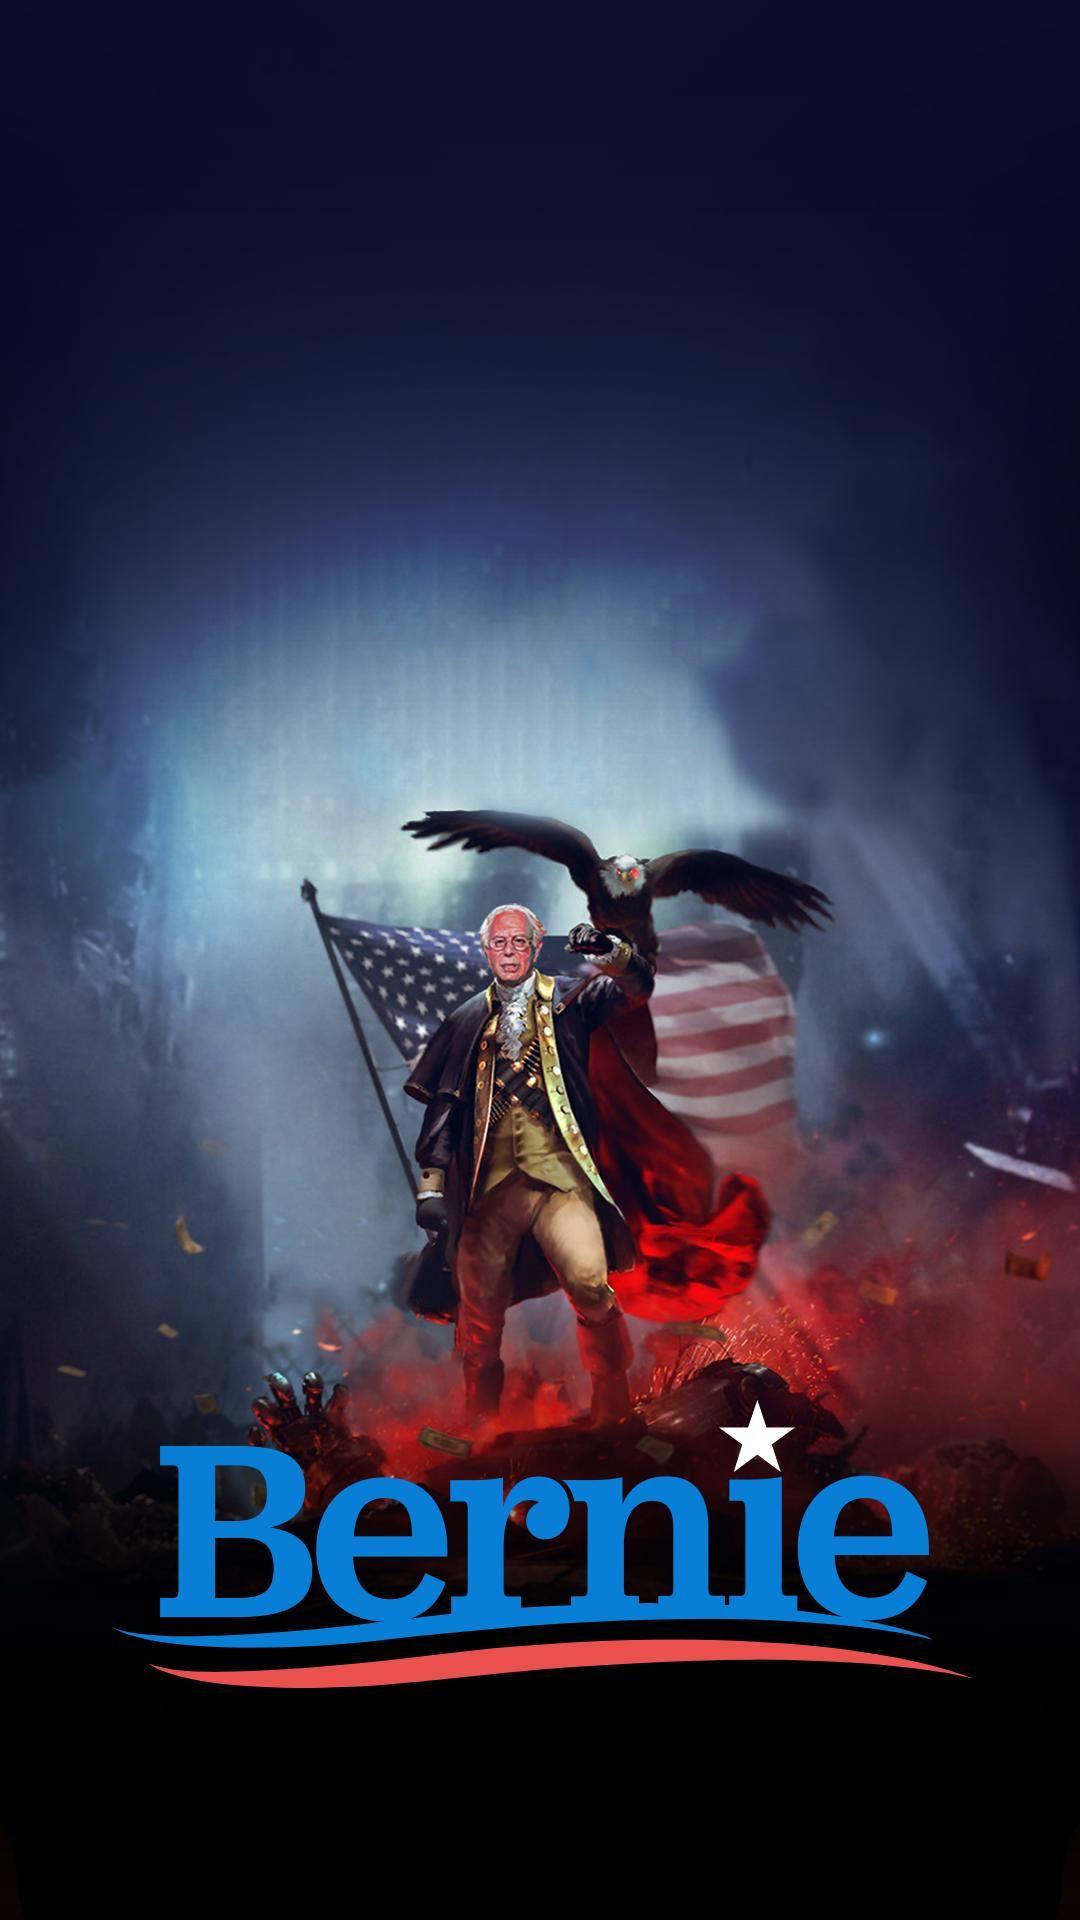 Poster for Bernie Sanders 2016 + Wallpaper + iPhone BG. Bernie